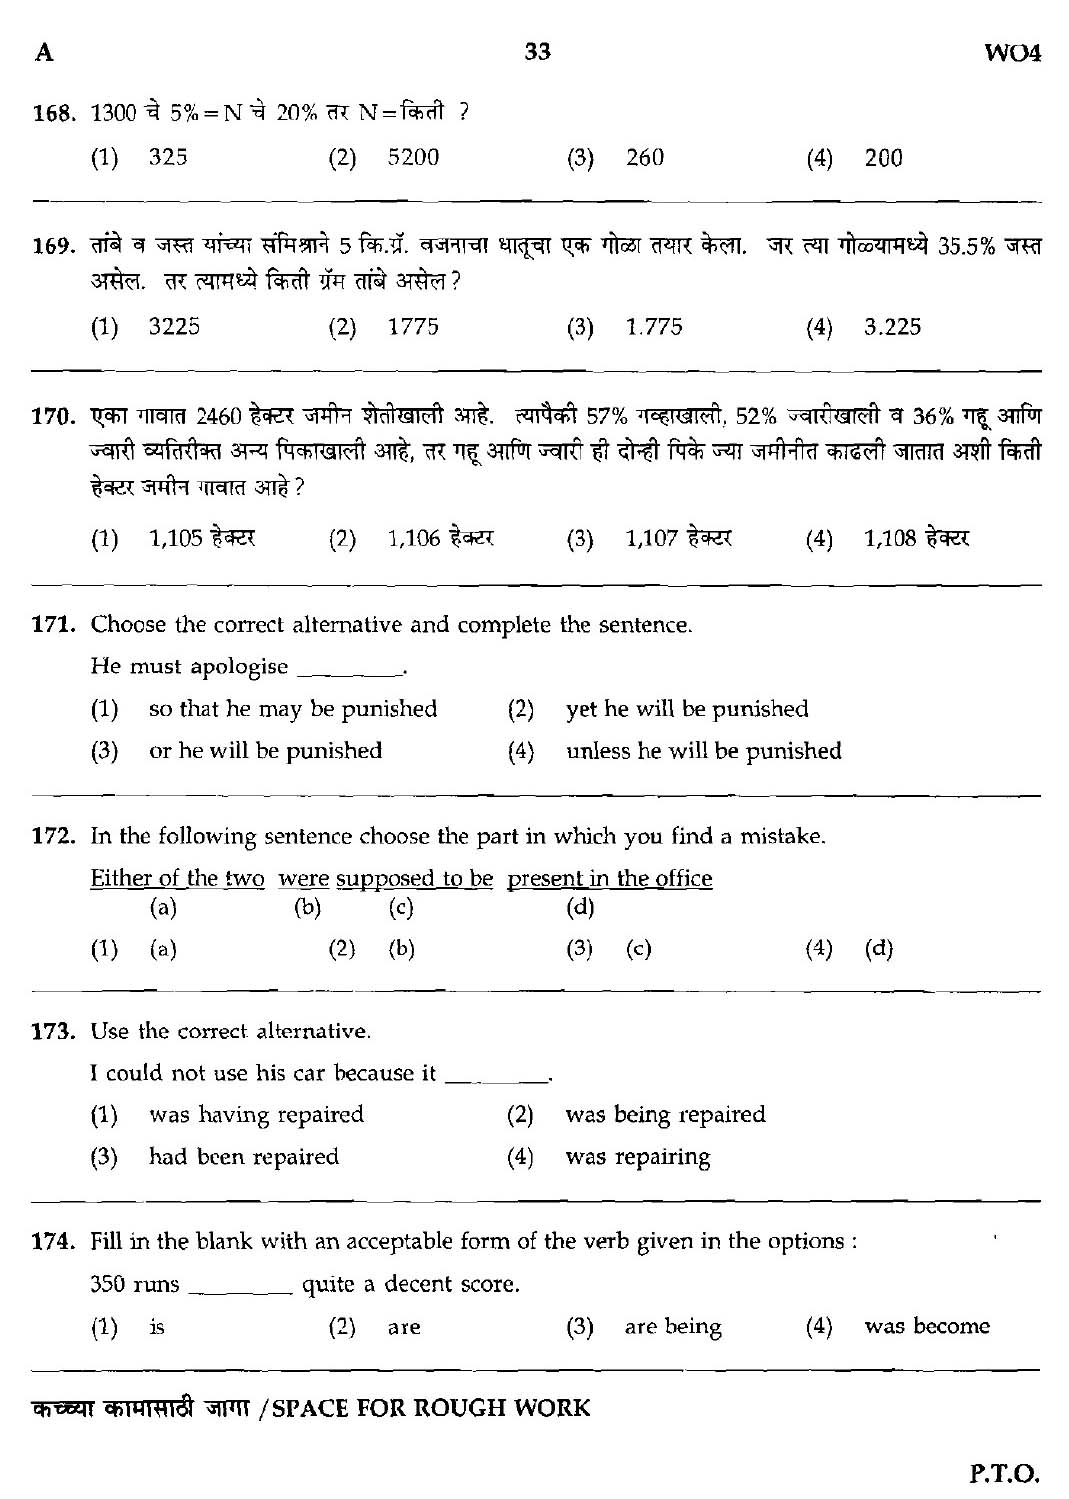 Maharashtra PSC Clerk Typist Exam Question Paper 2014 32